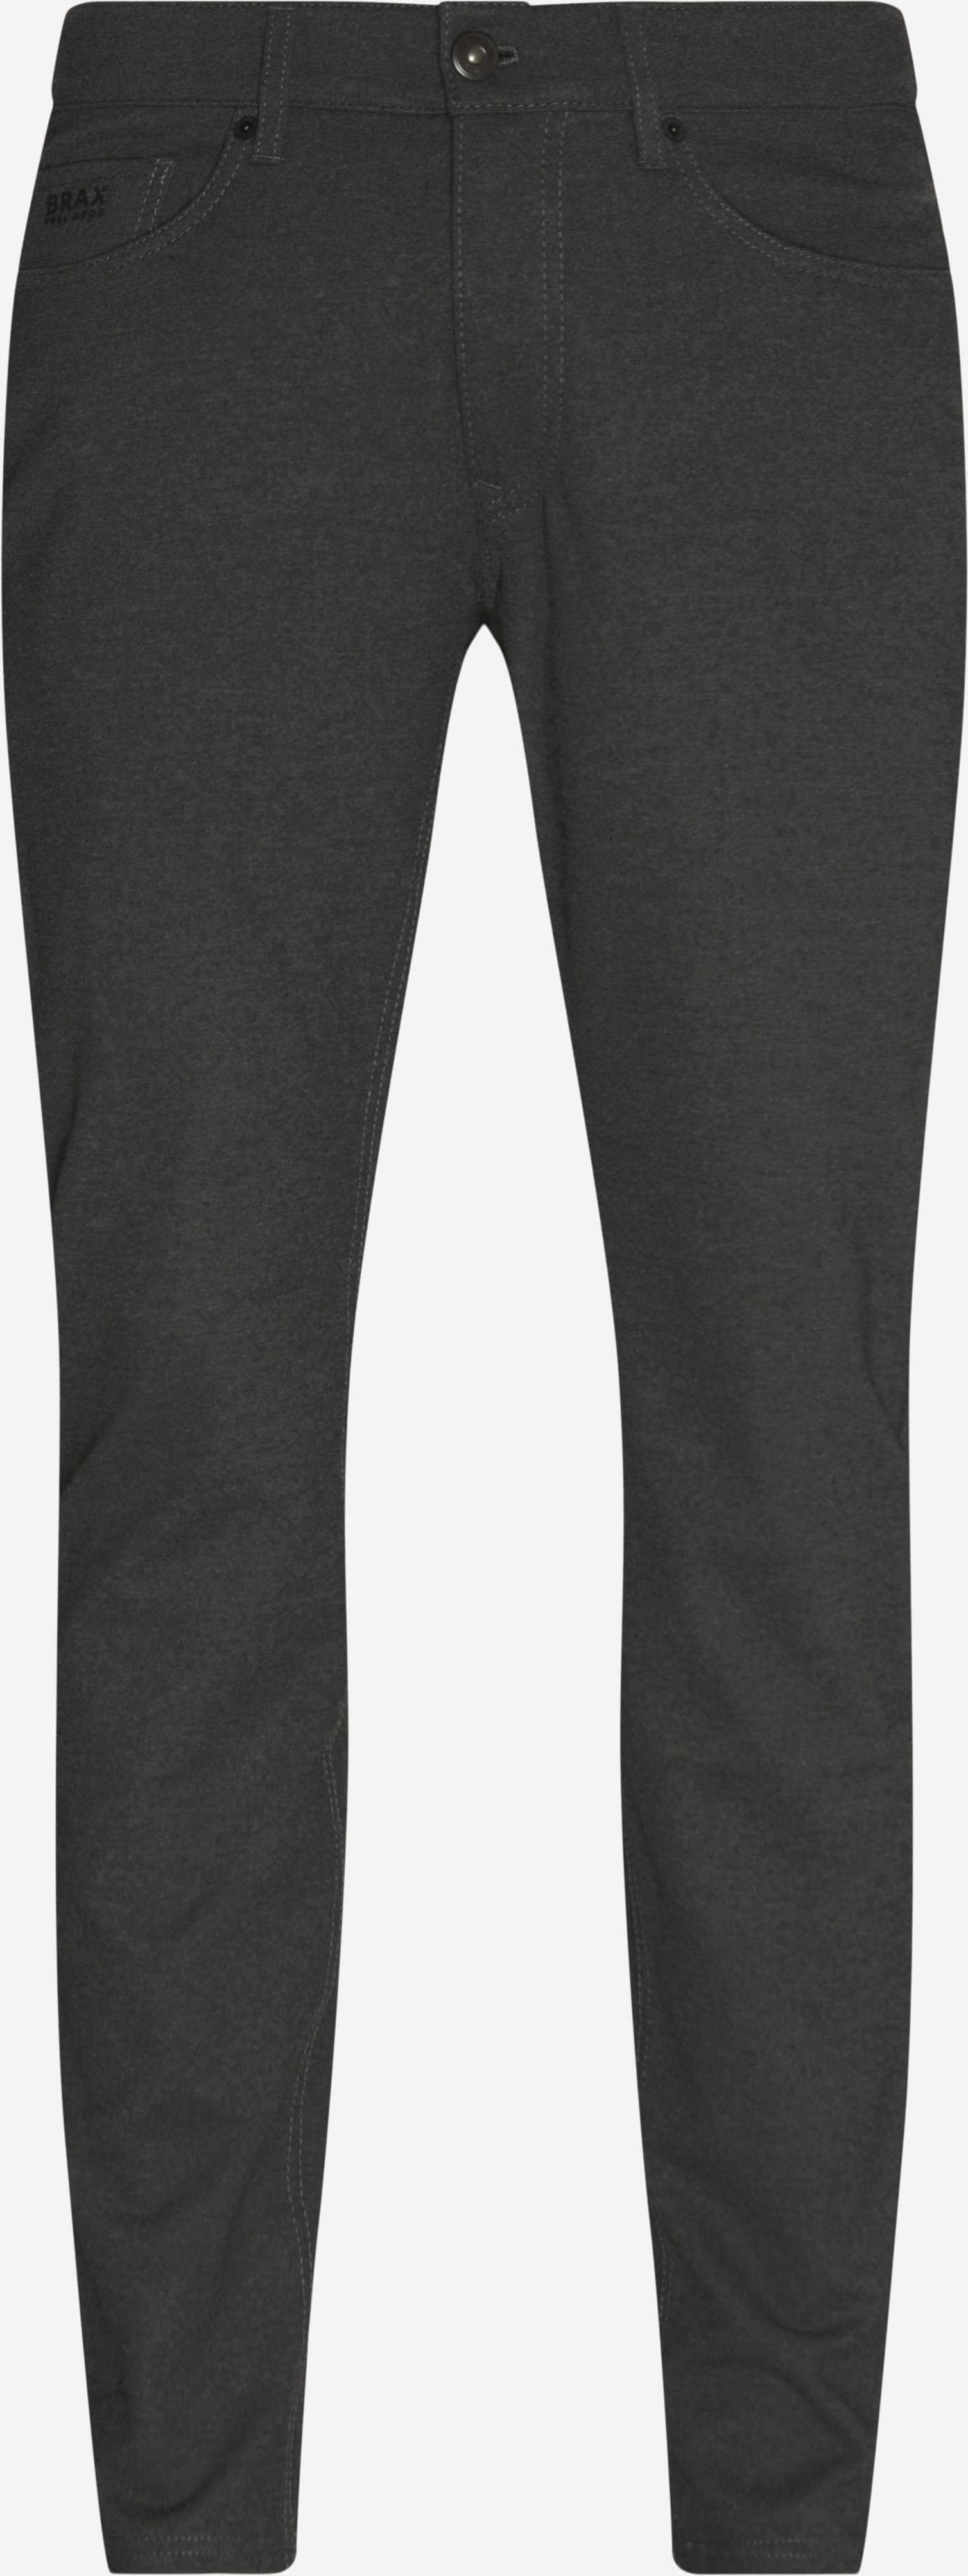 5104 Chris Hose - Jeans - Slim fit - Grau